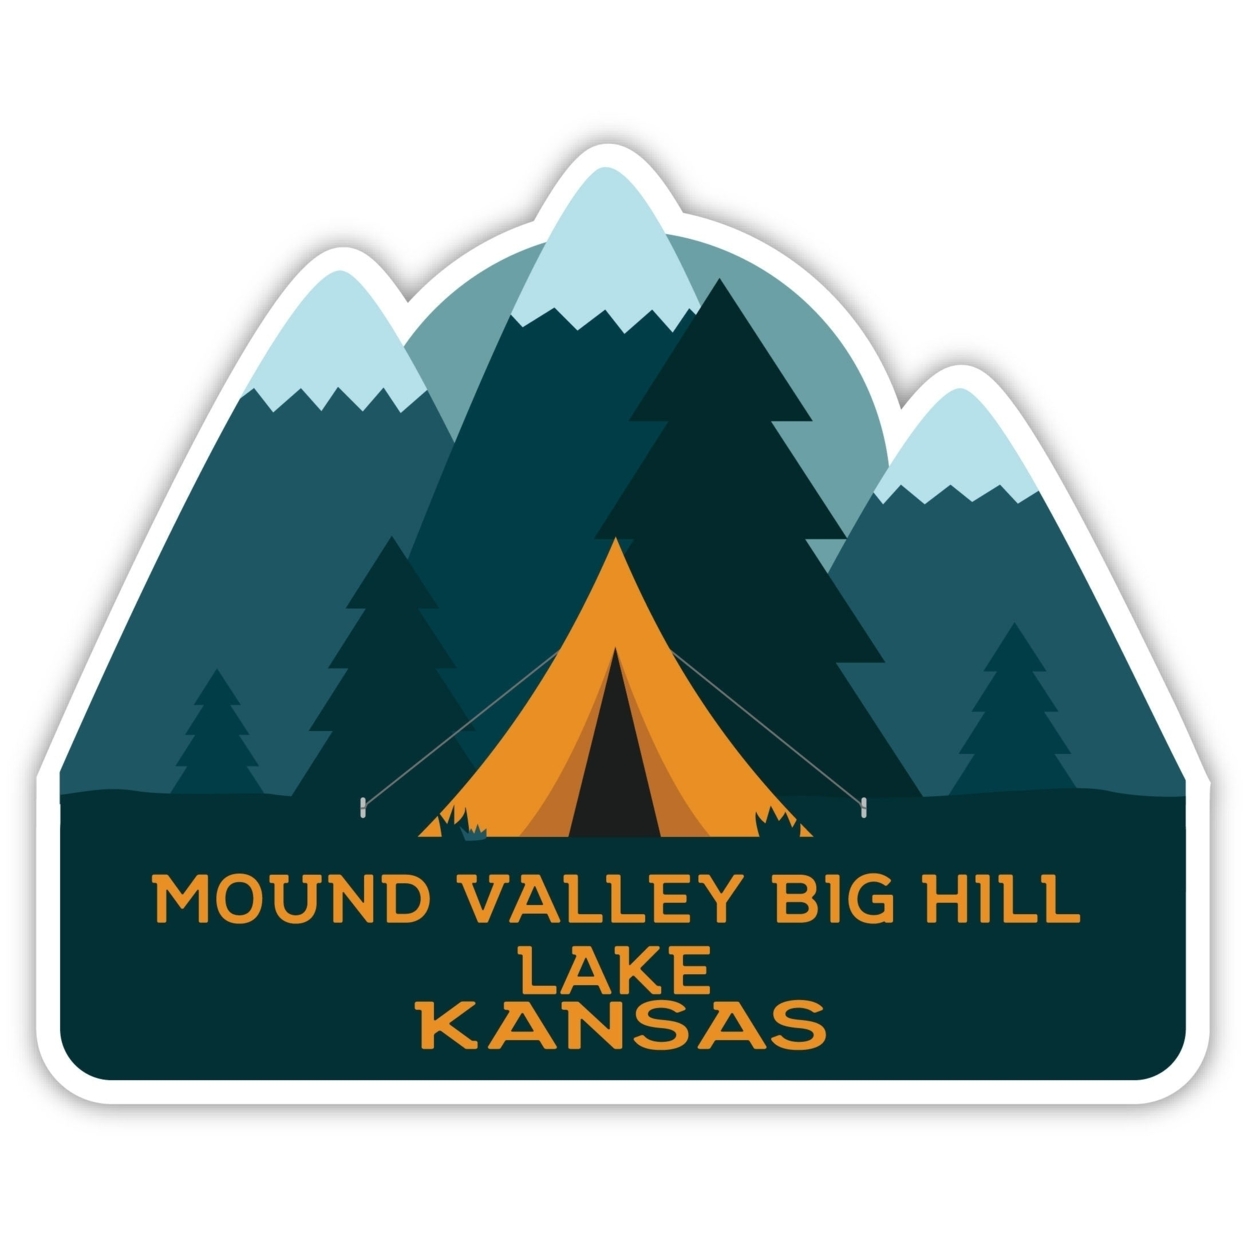 Mound Valley Big Hill Lake Kansas Souvenir Decorative Stickers (Choose Theme And Size) - Single Unit, 2-Inch, Tent